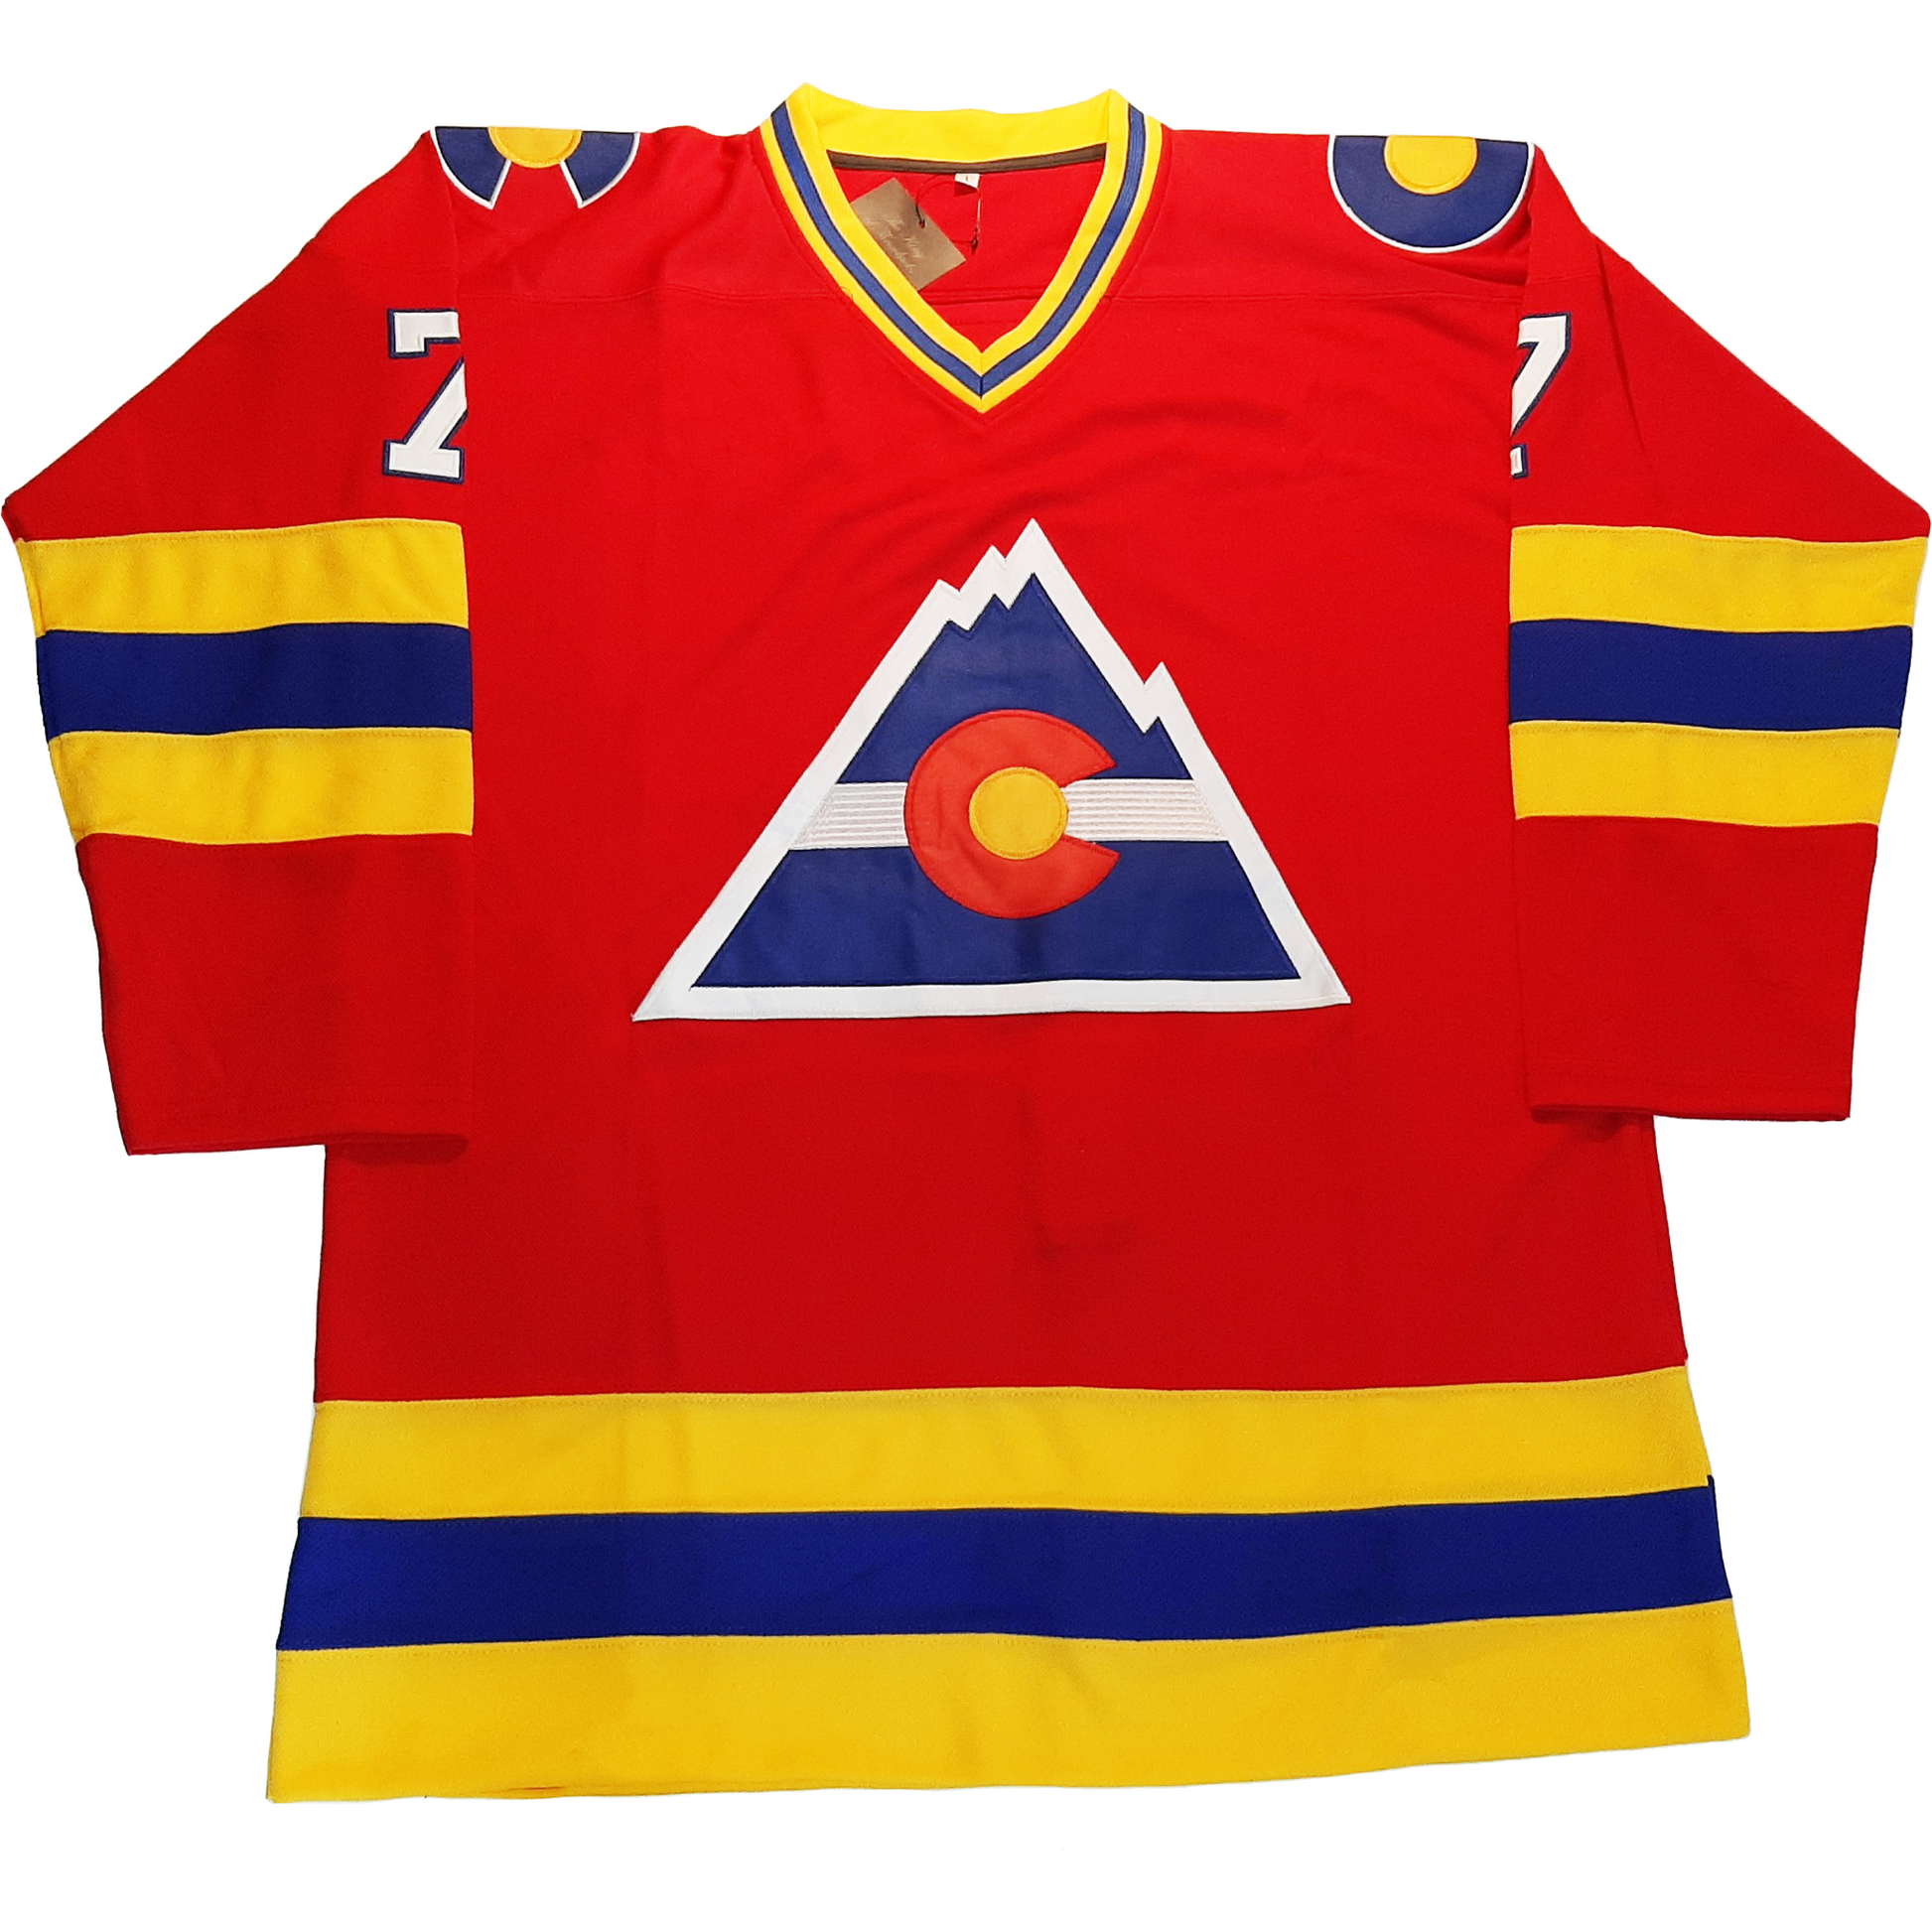 1978 NHL Colorado Rockies Hockey Jerseys